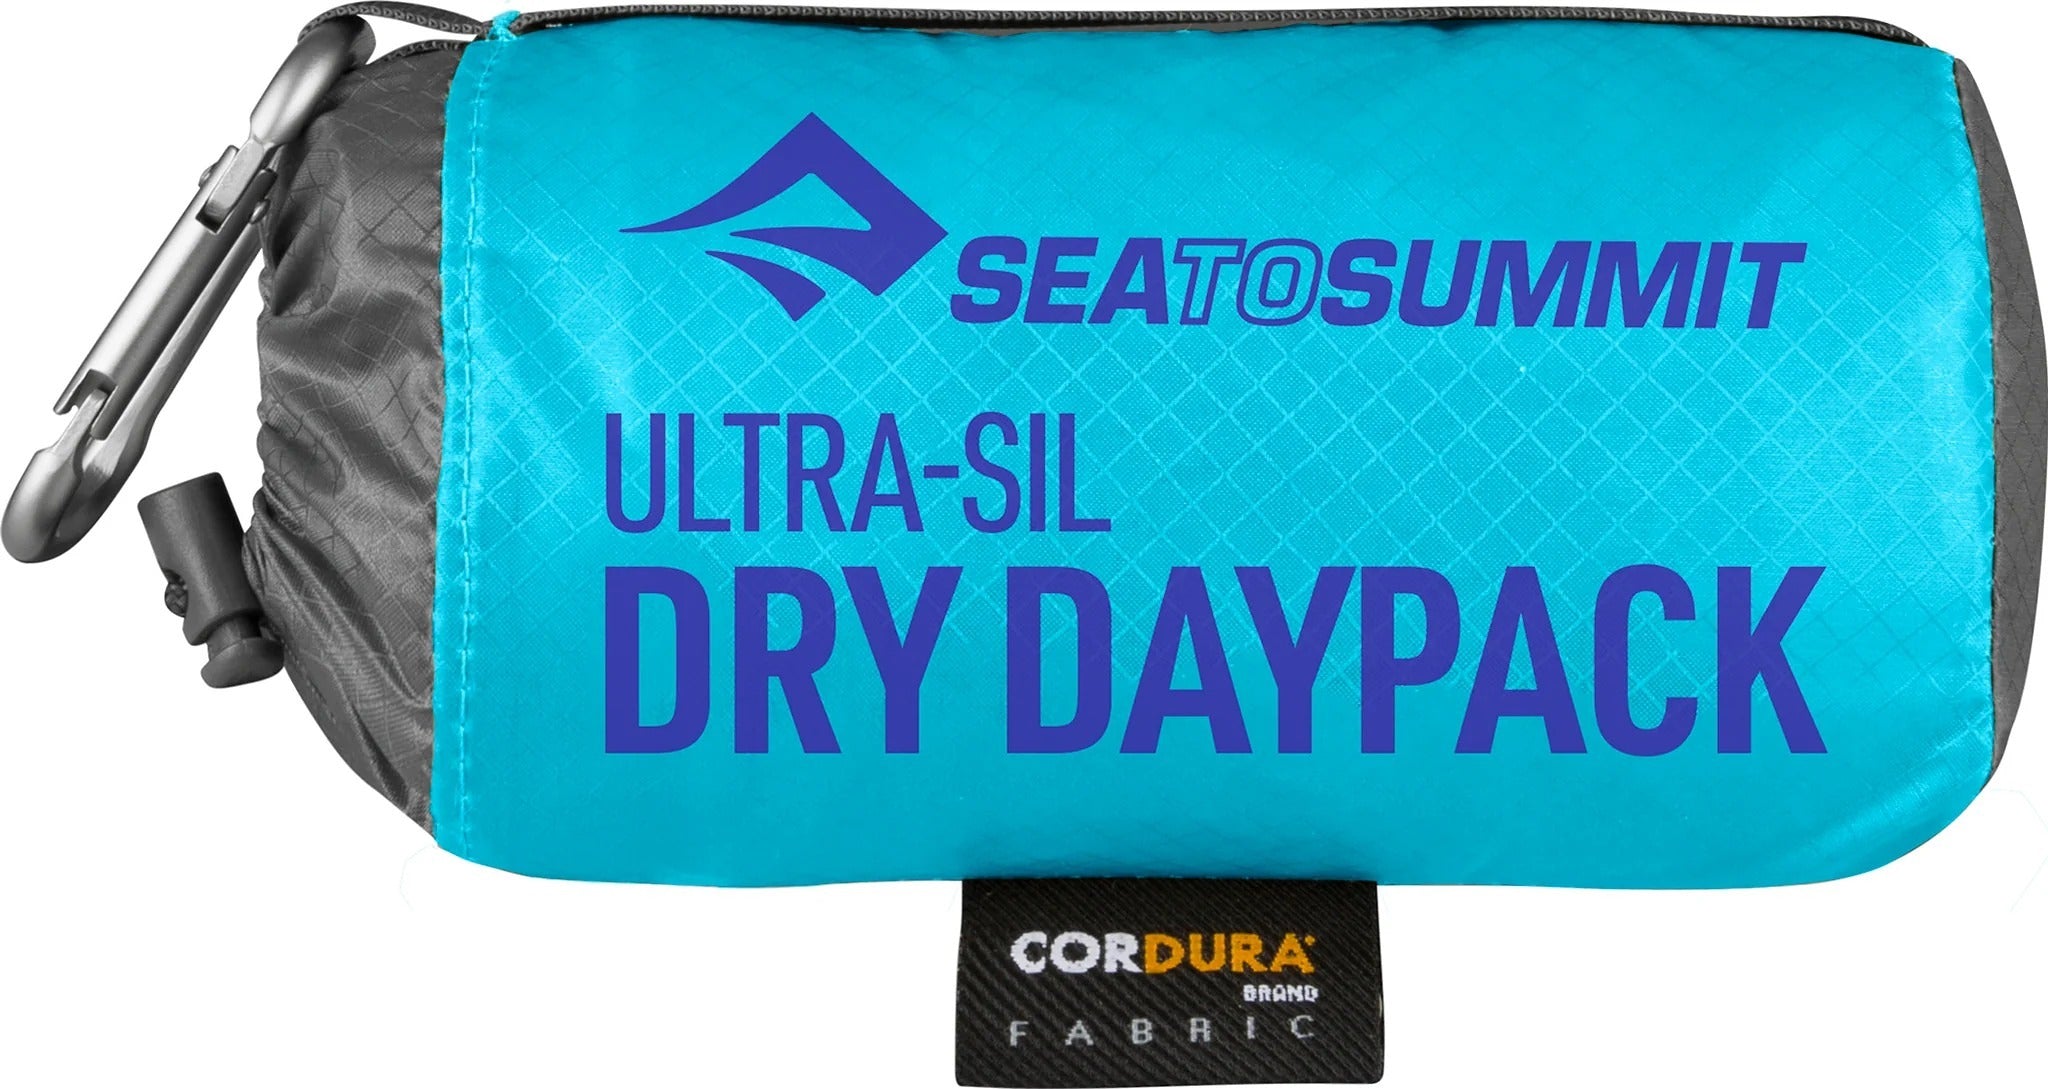 Sac à dos Sea to Summit Ultra-Sil Daypack 20L bleu